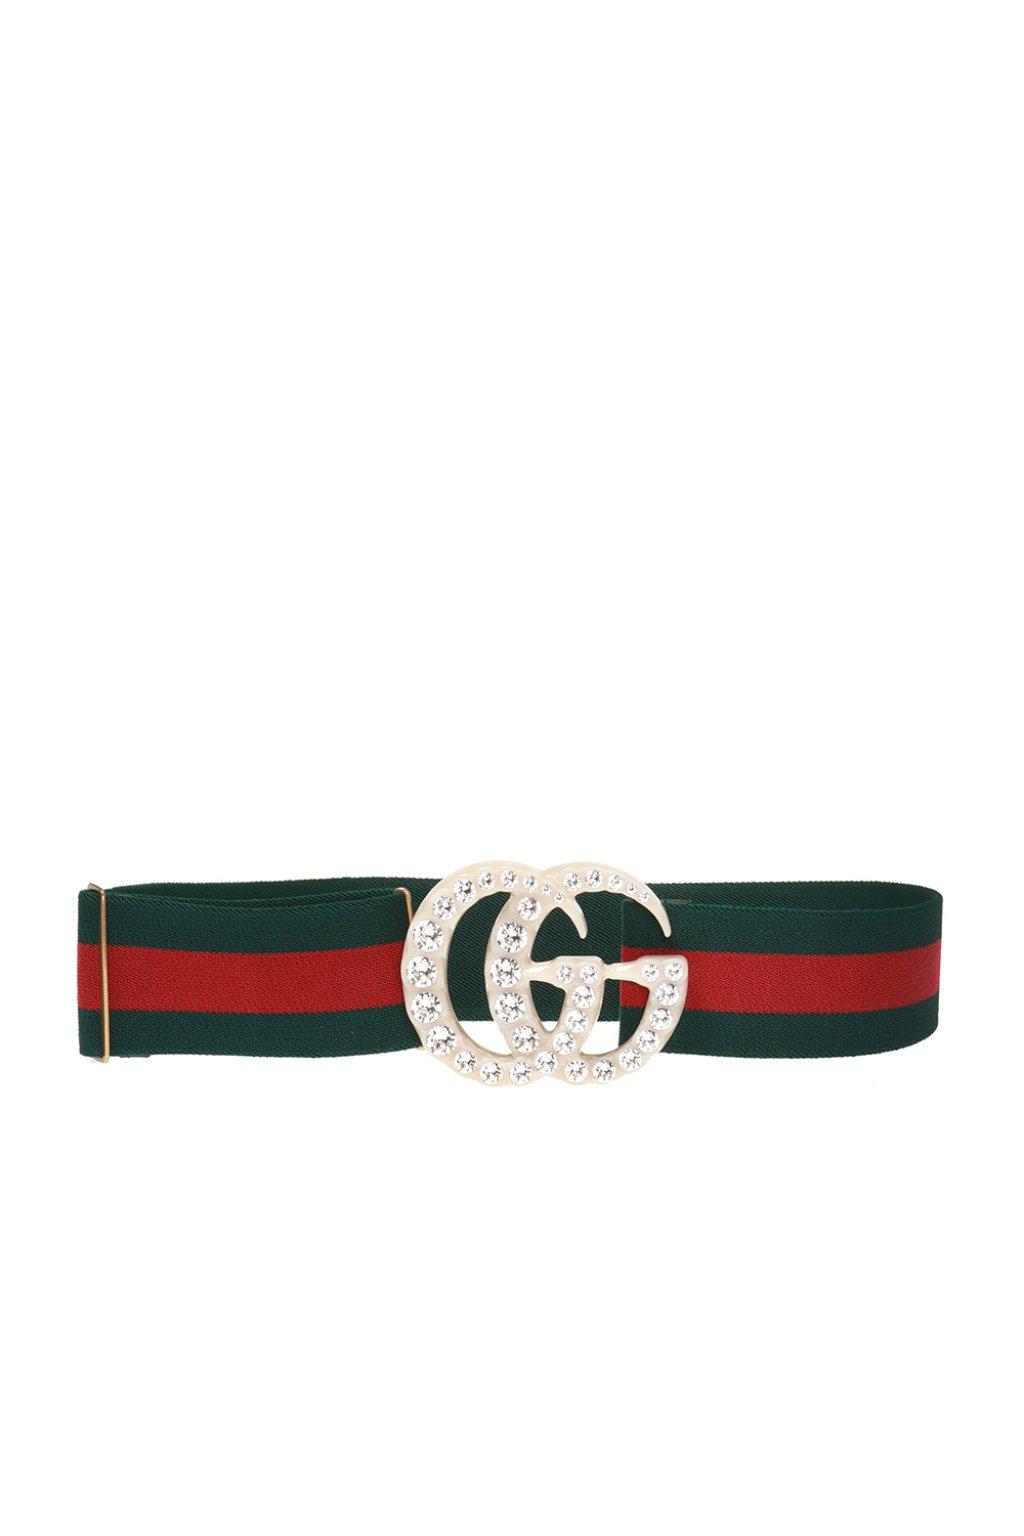 gucci belt black red green